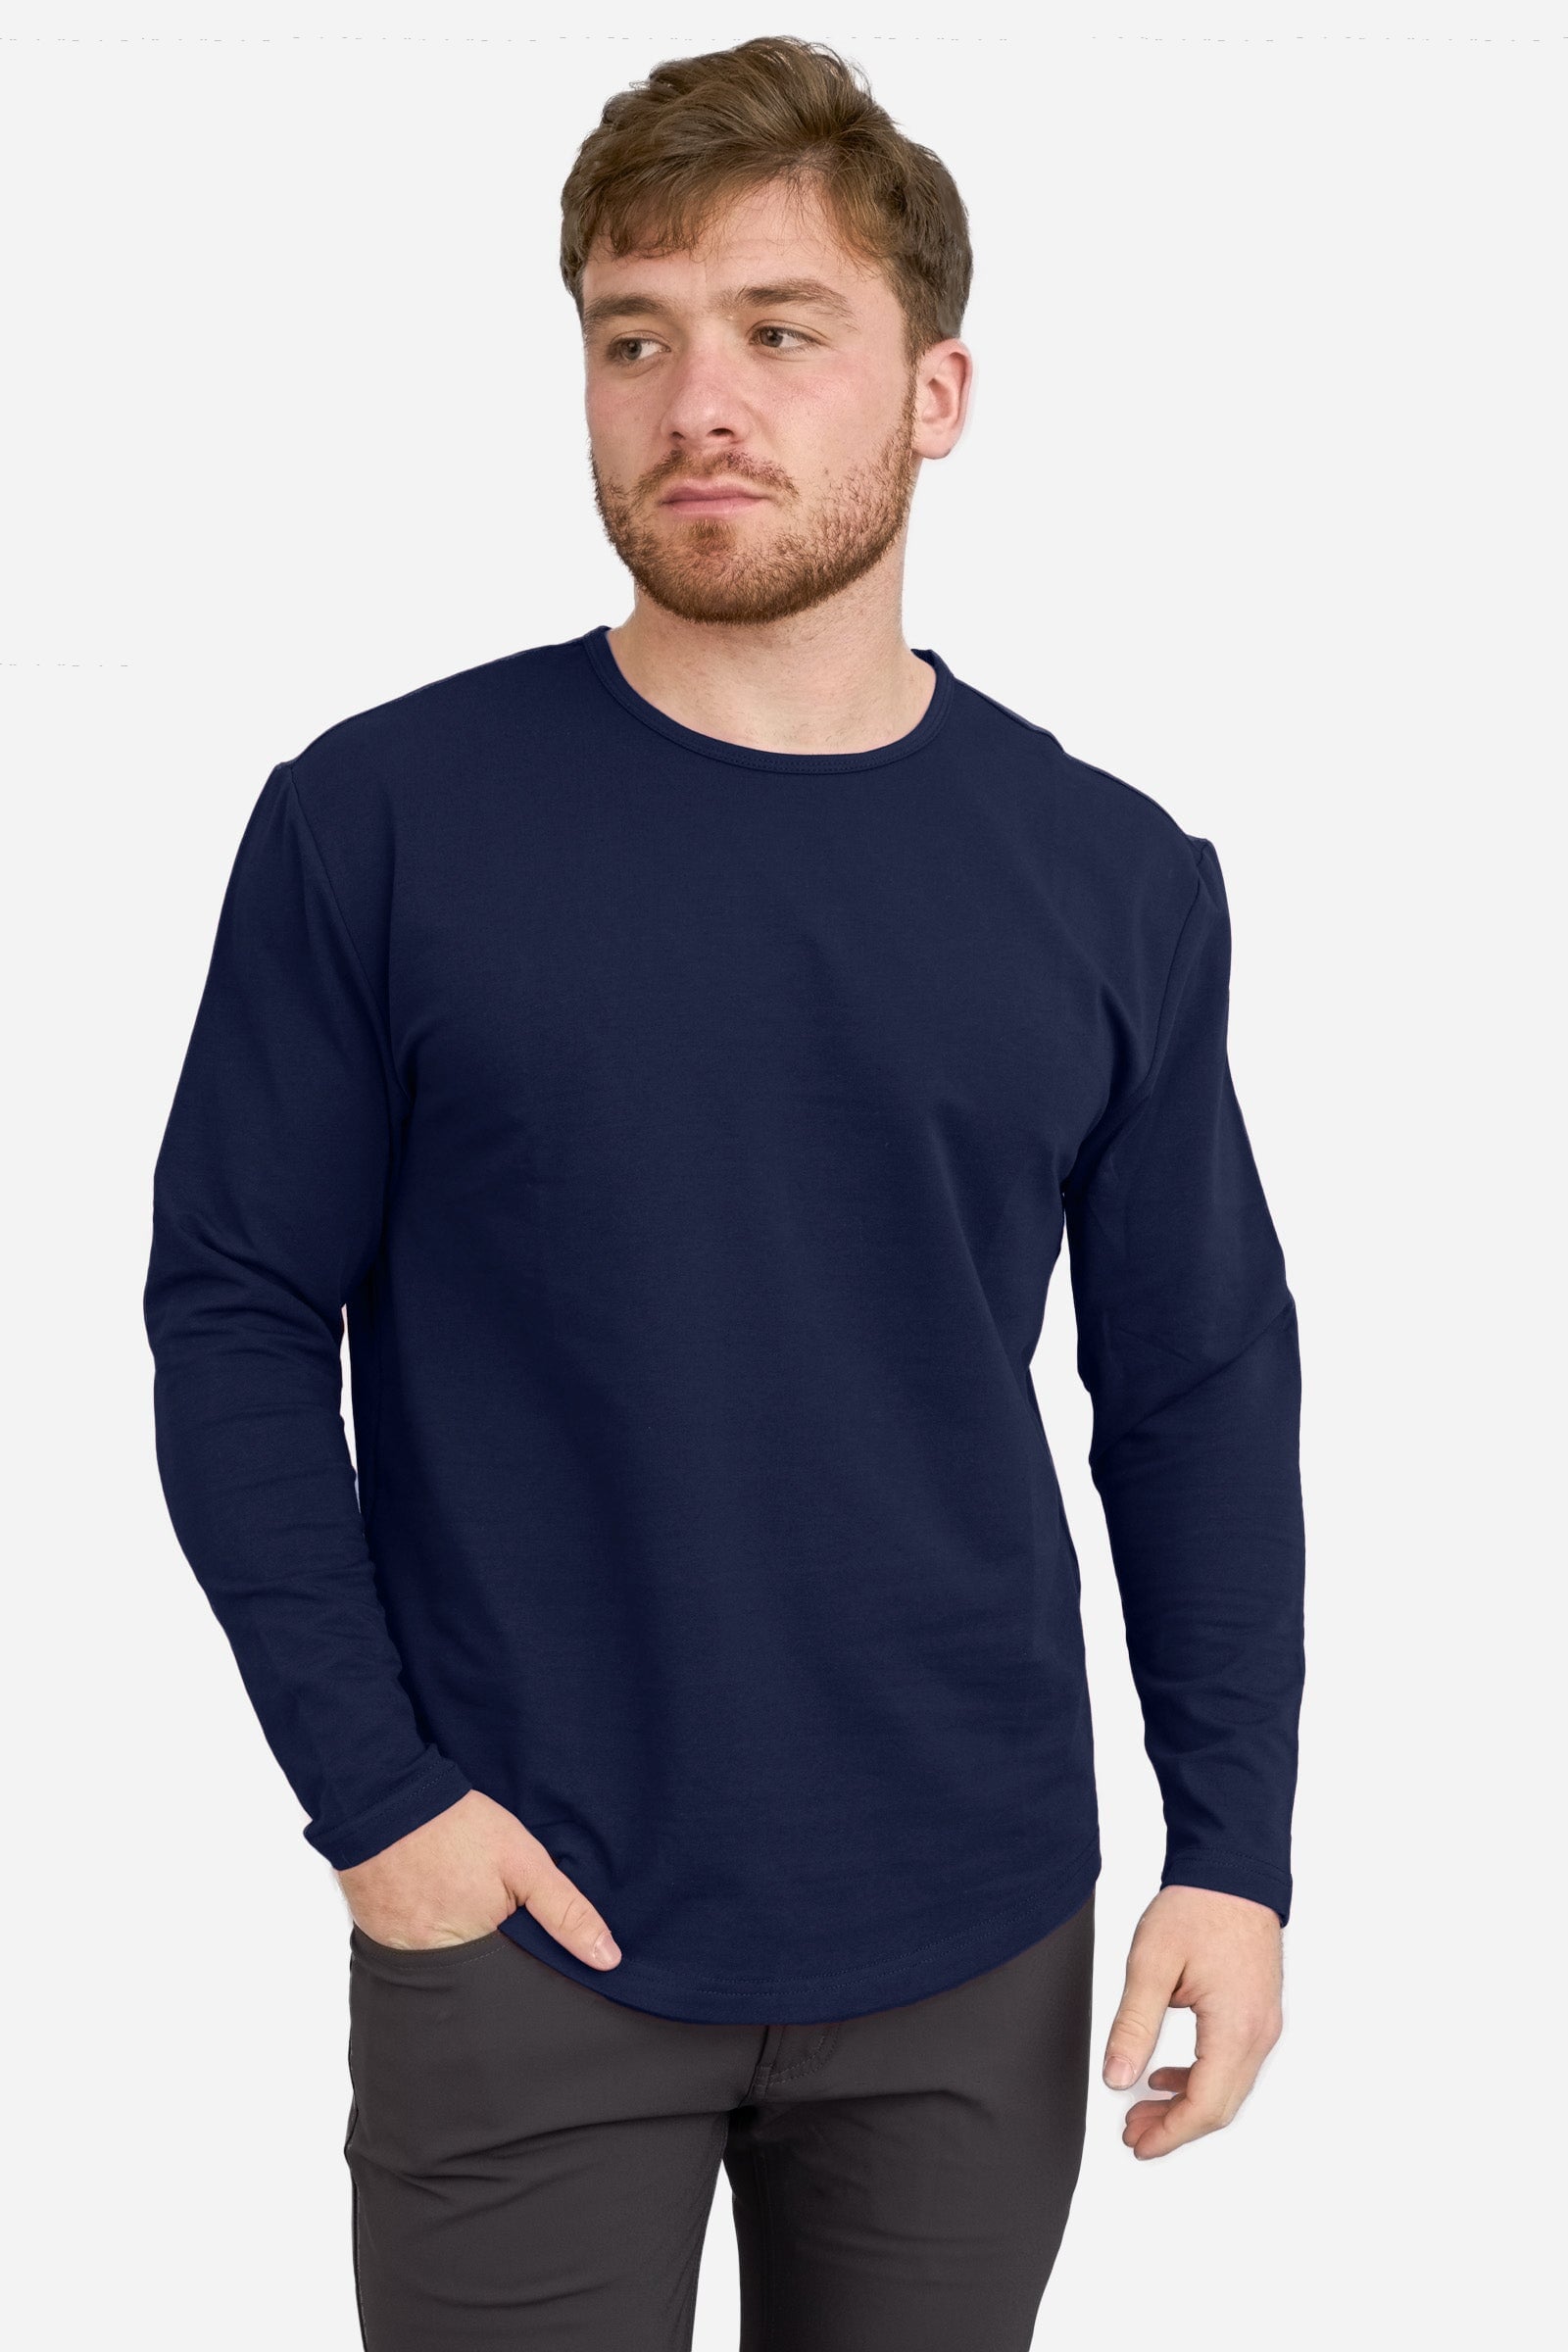 Long Sleeve Athletic Blend T-Shirt Navy